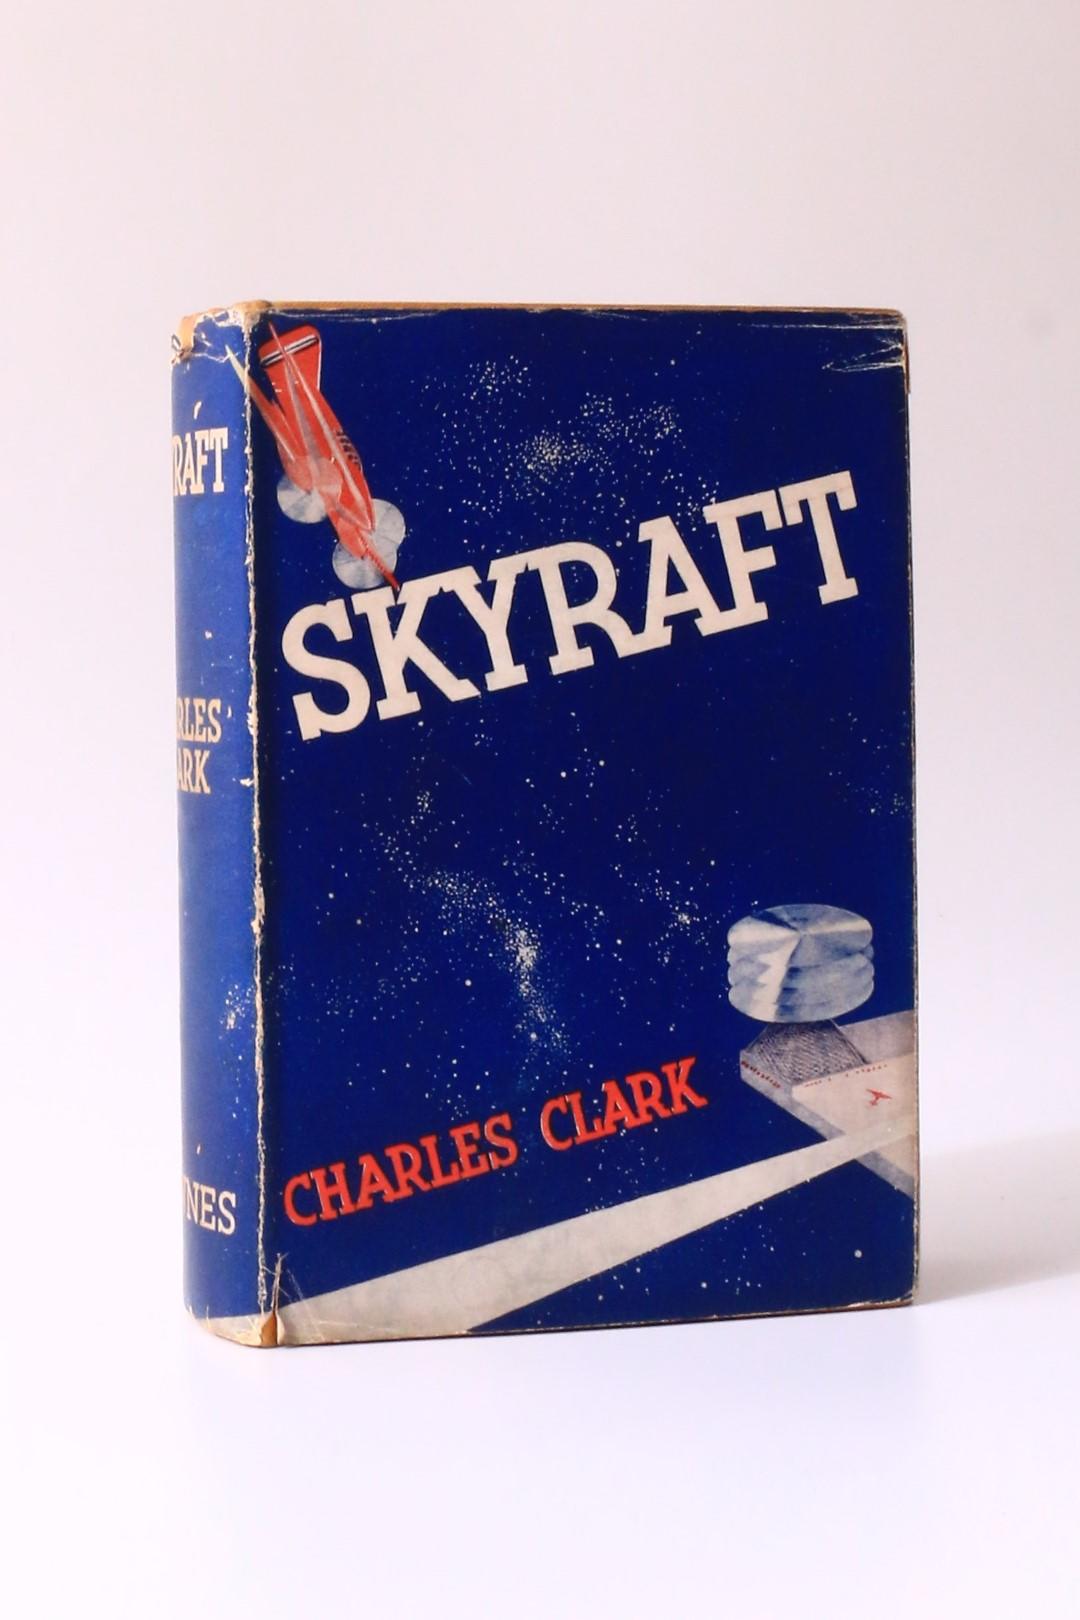 Charles Clark - Skyraft - Newnes, 1937, First Edition.